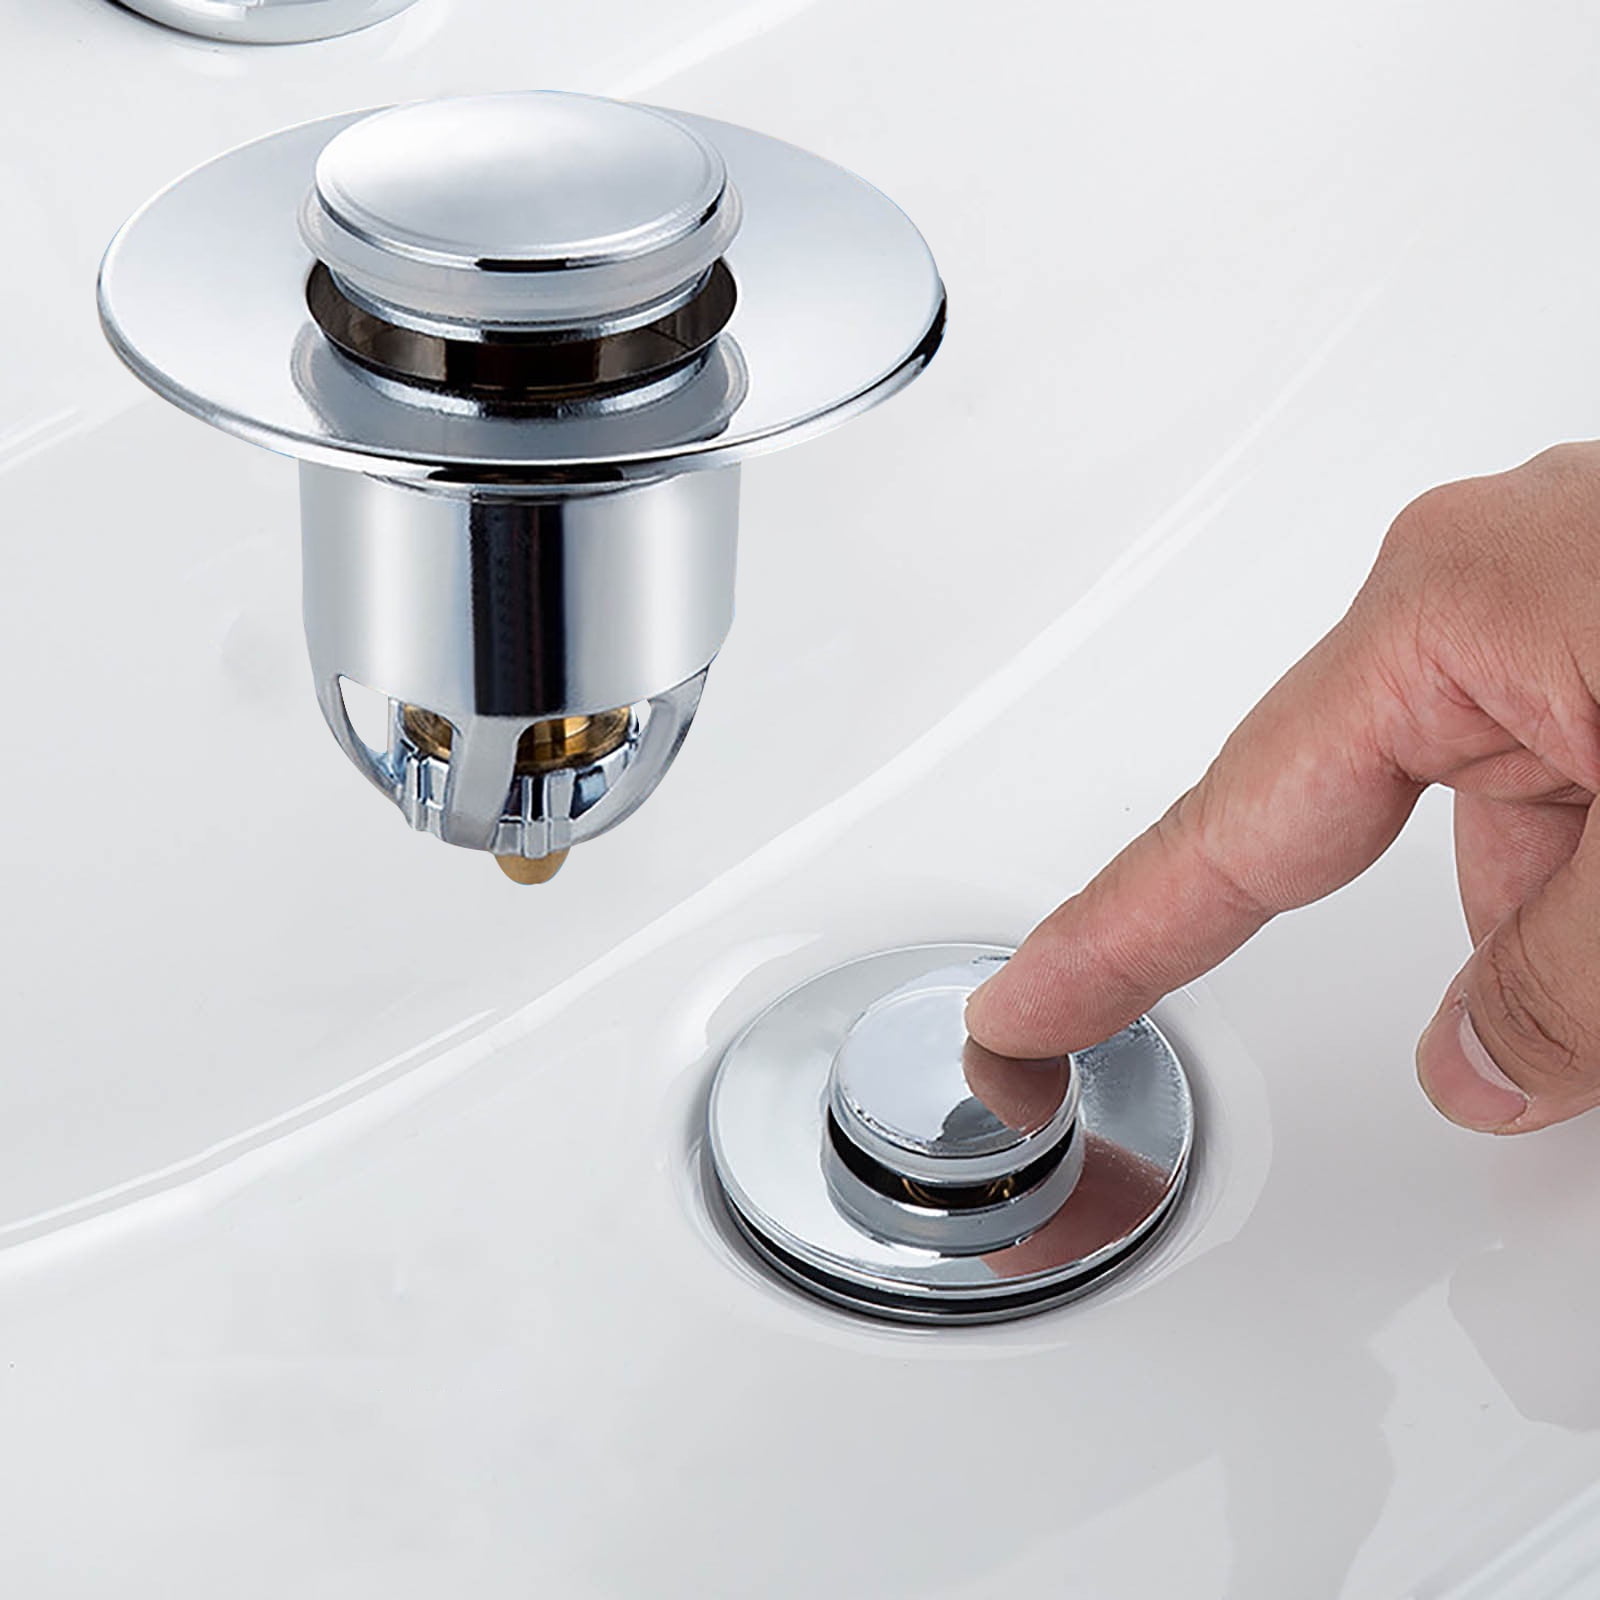 2 Pcs Drain Sink Plug Garbage Strainer Stopper Covers 8cm Dia